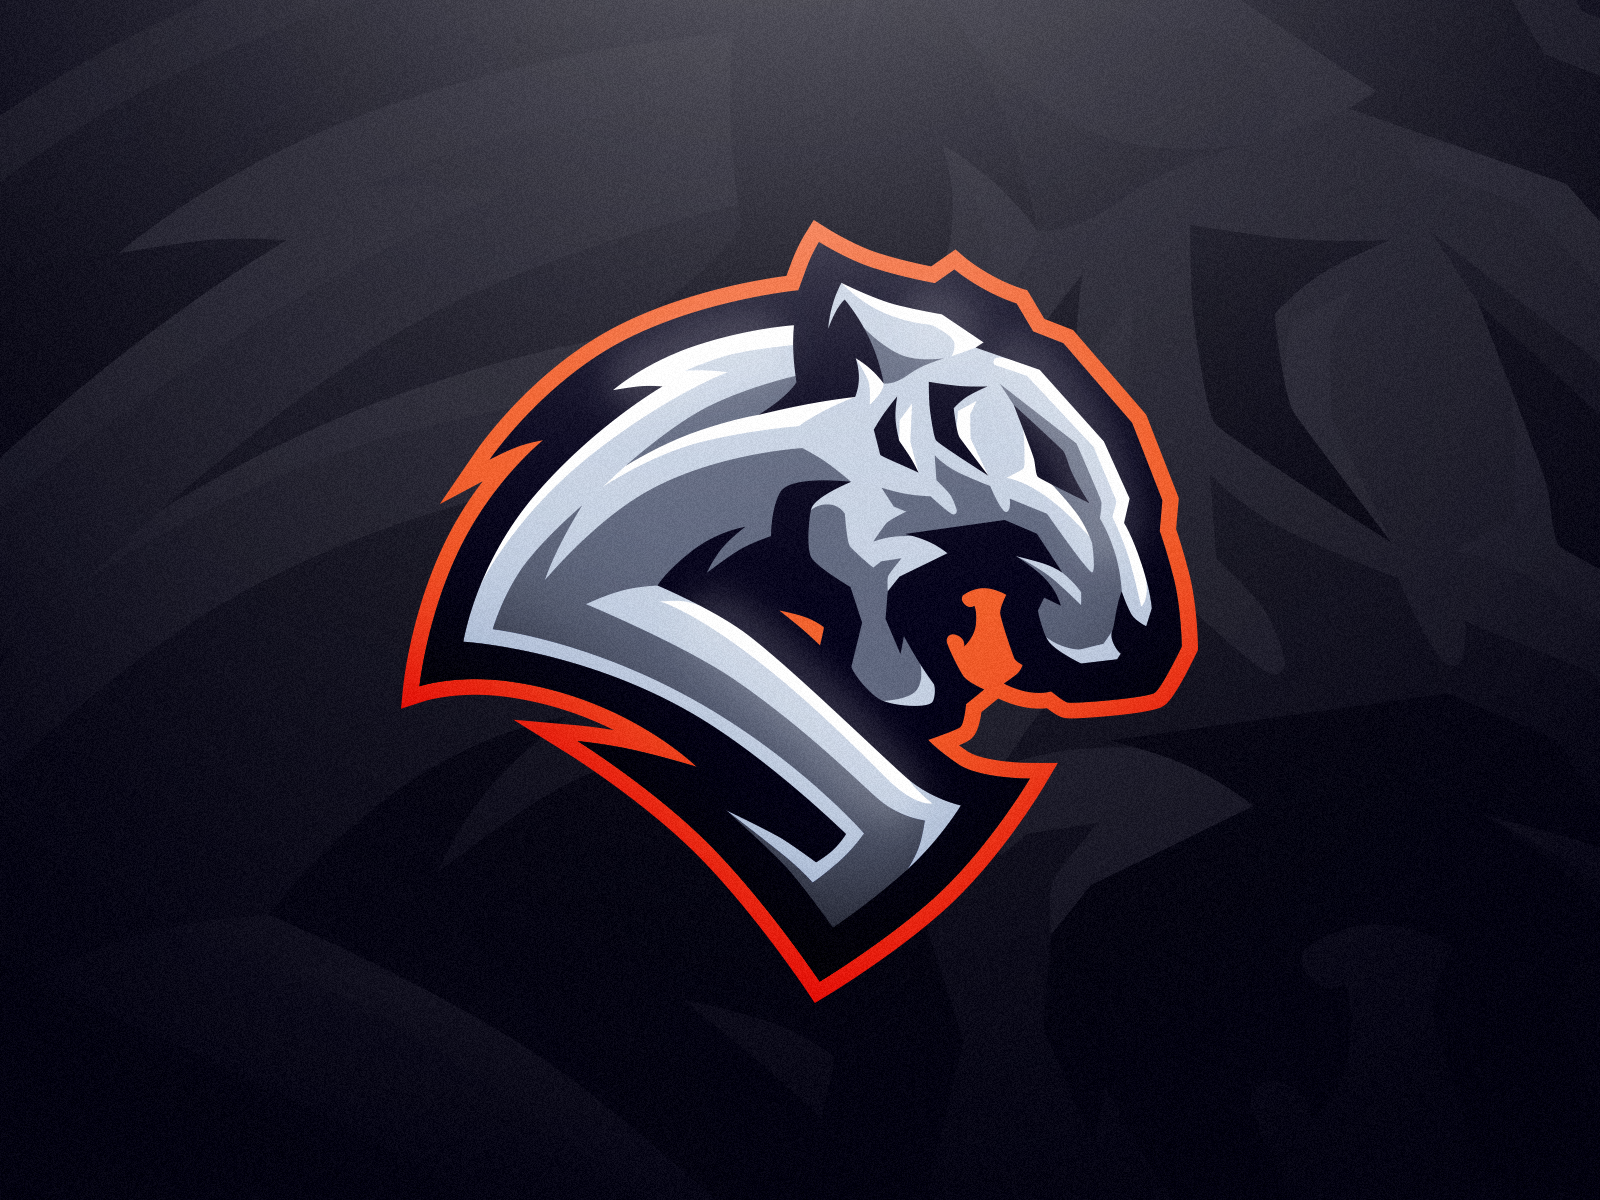 Tiger sport gaming logo design Royalty Free Vector Image